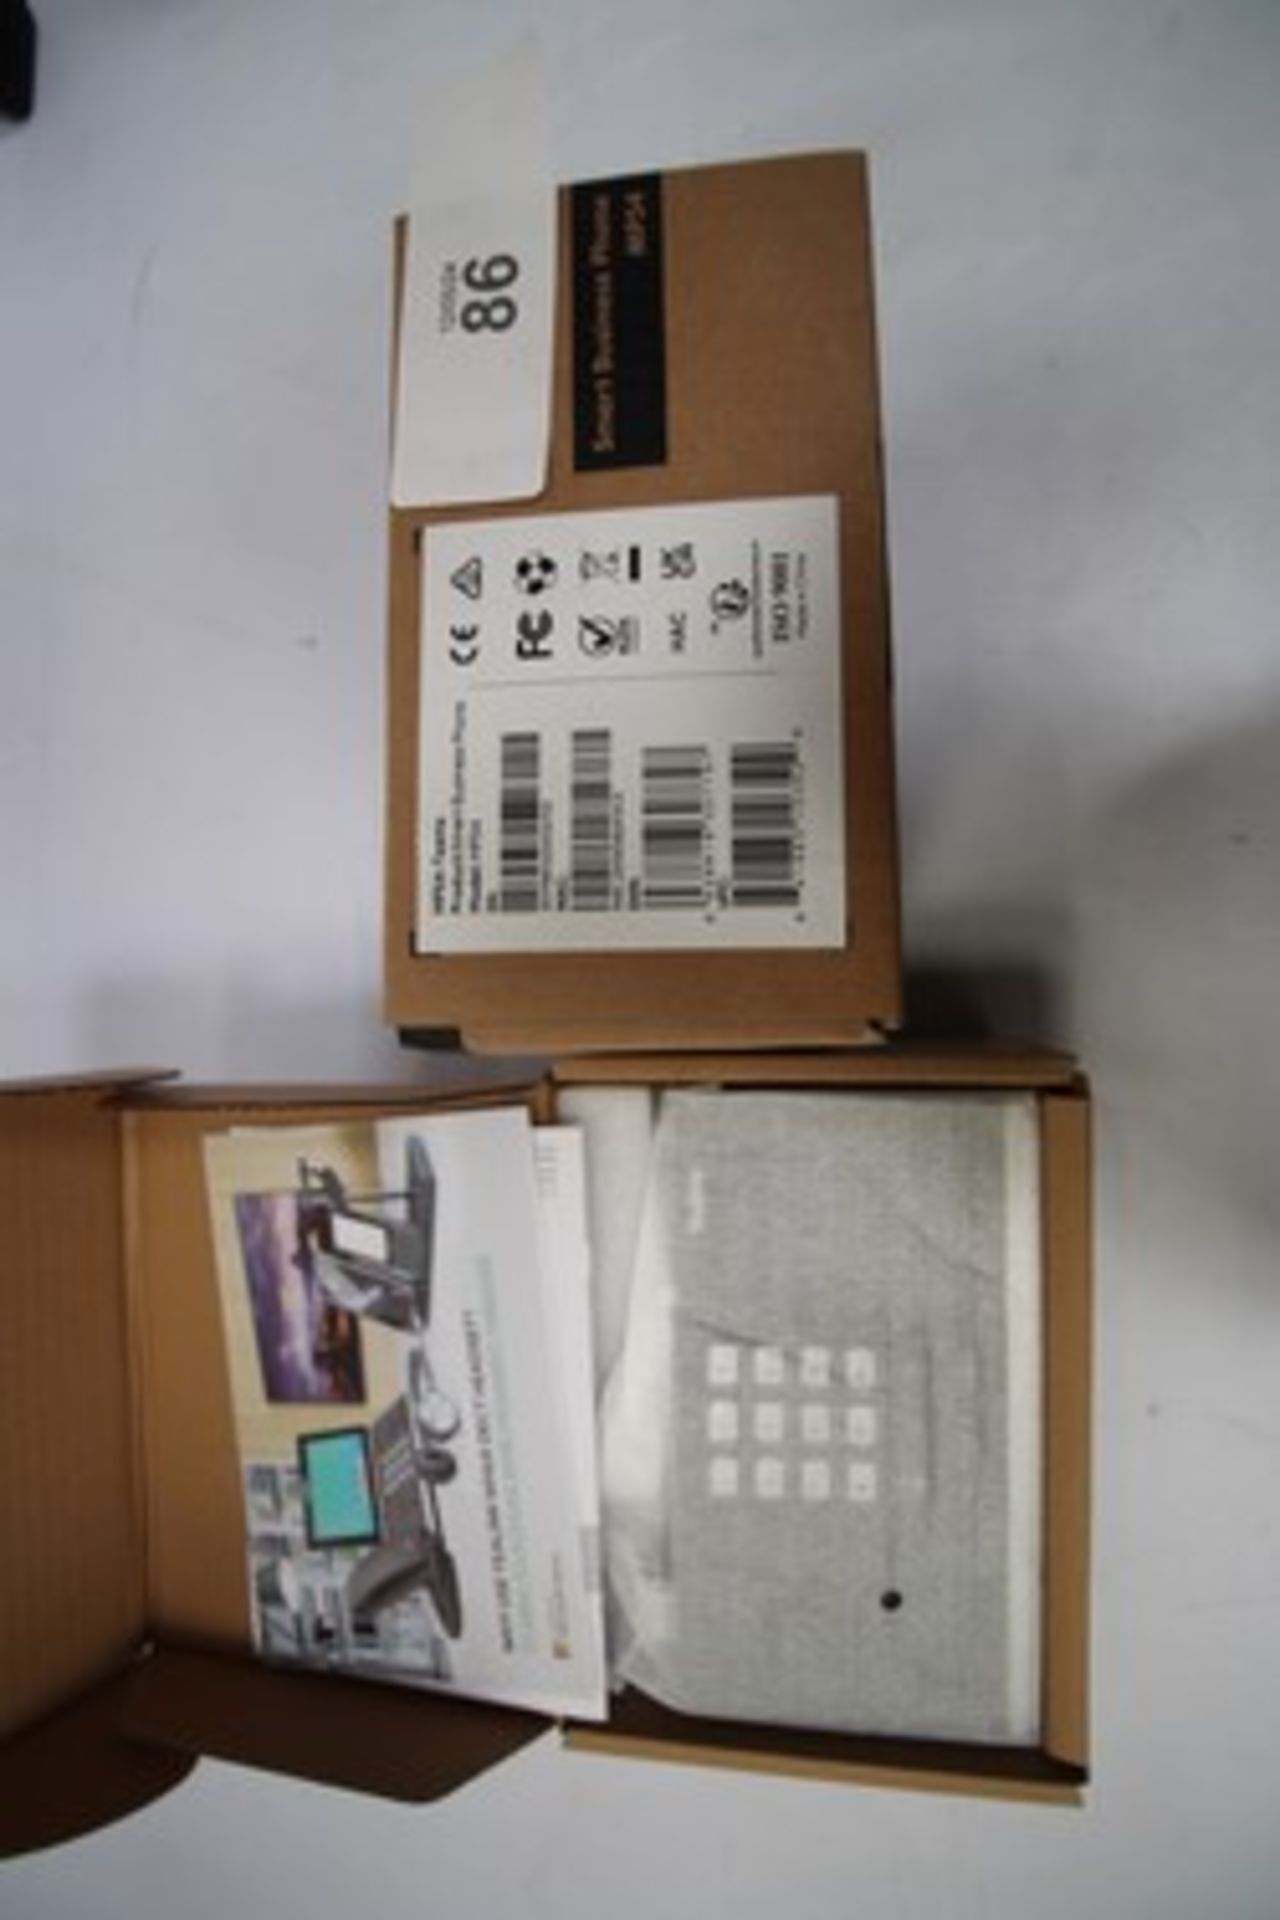 2 x Yealink MP54 teams office phones - new in box (ES9)